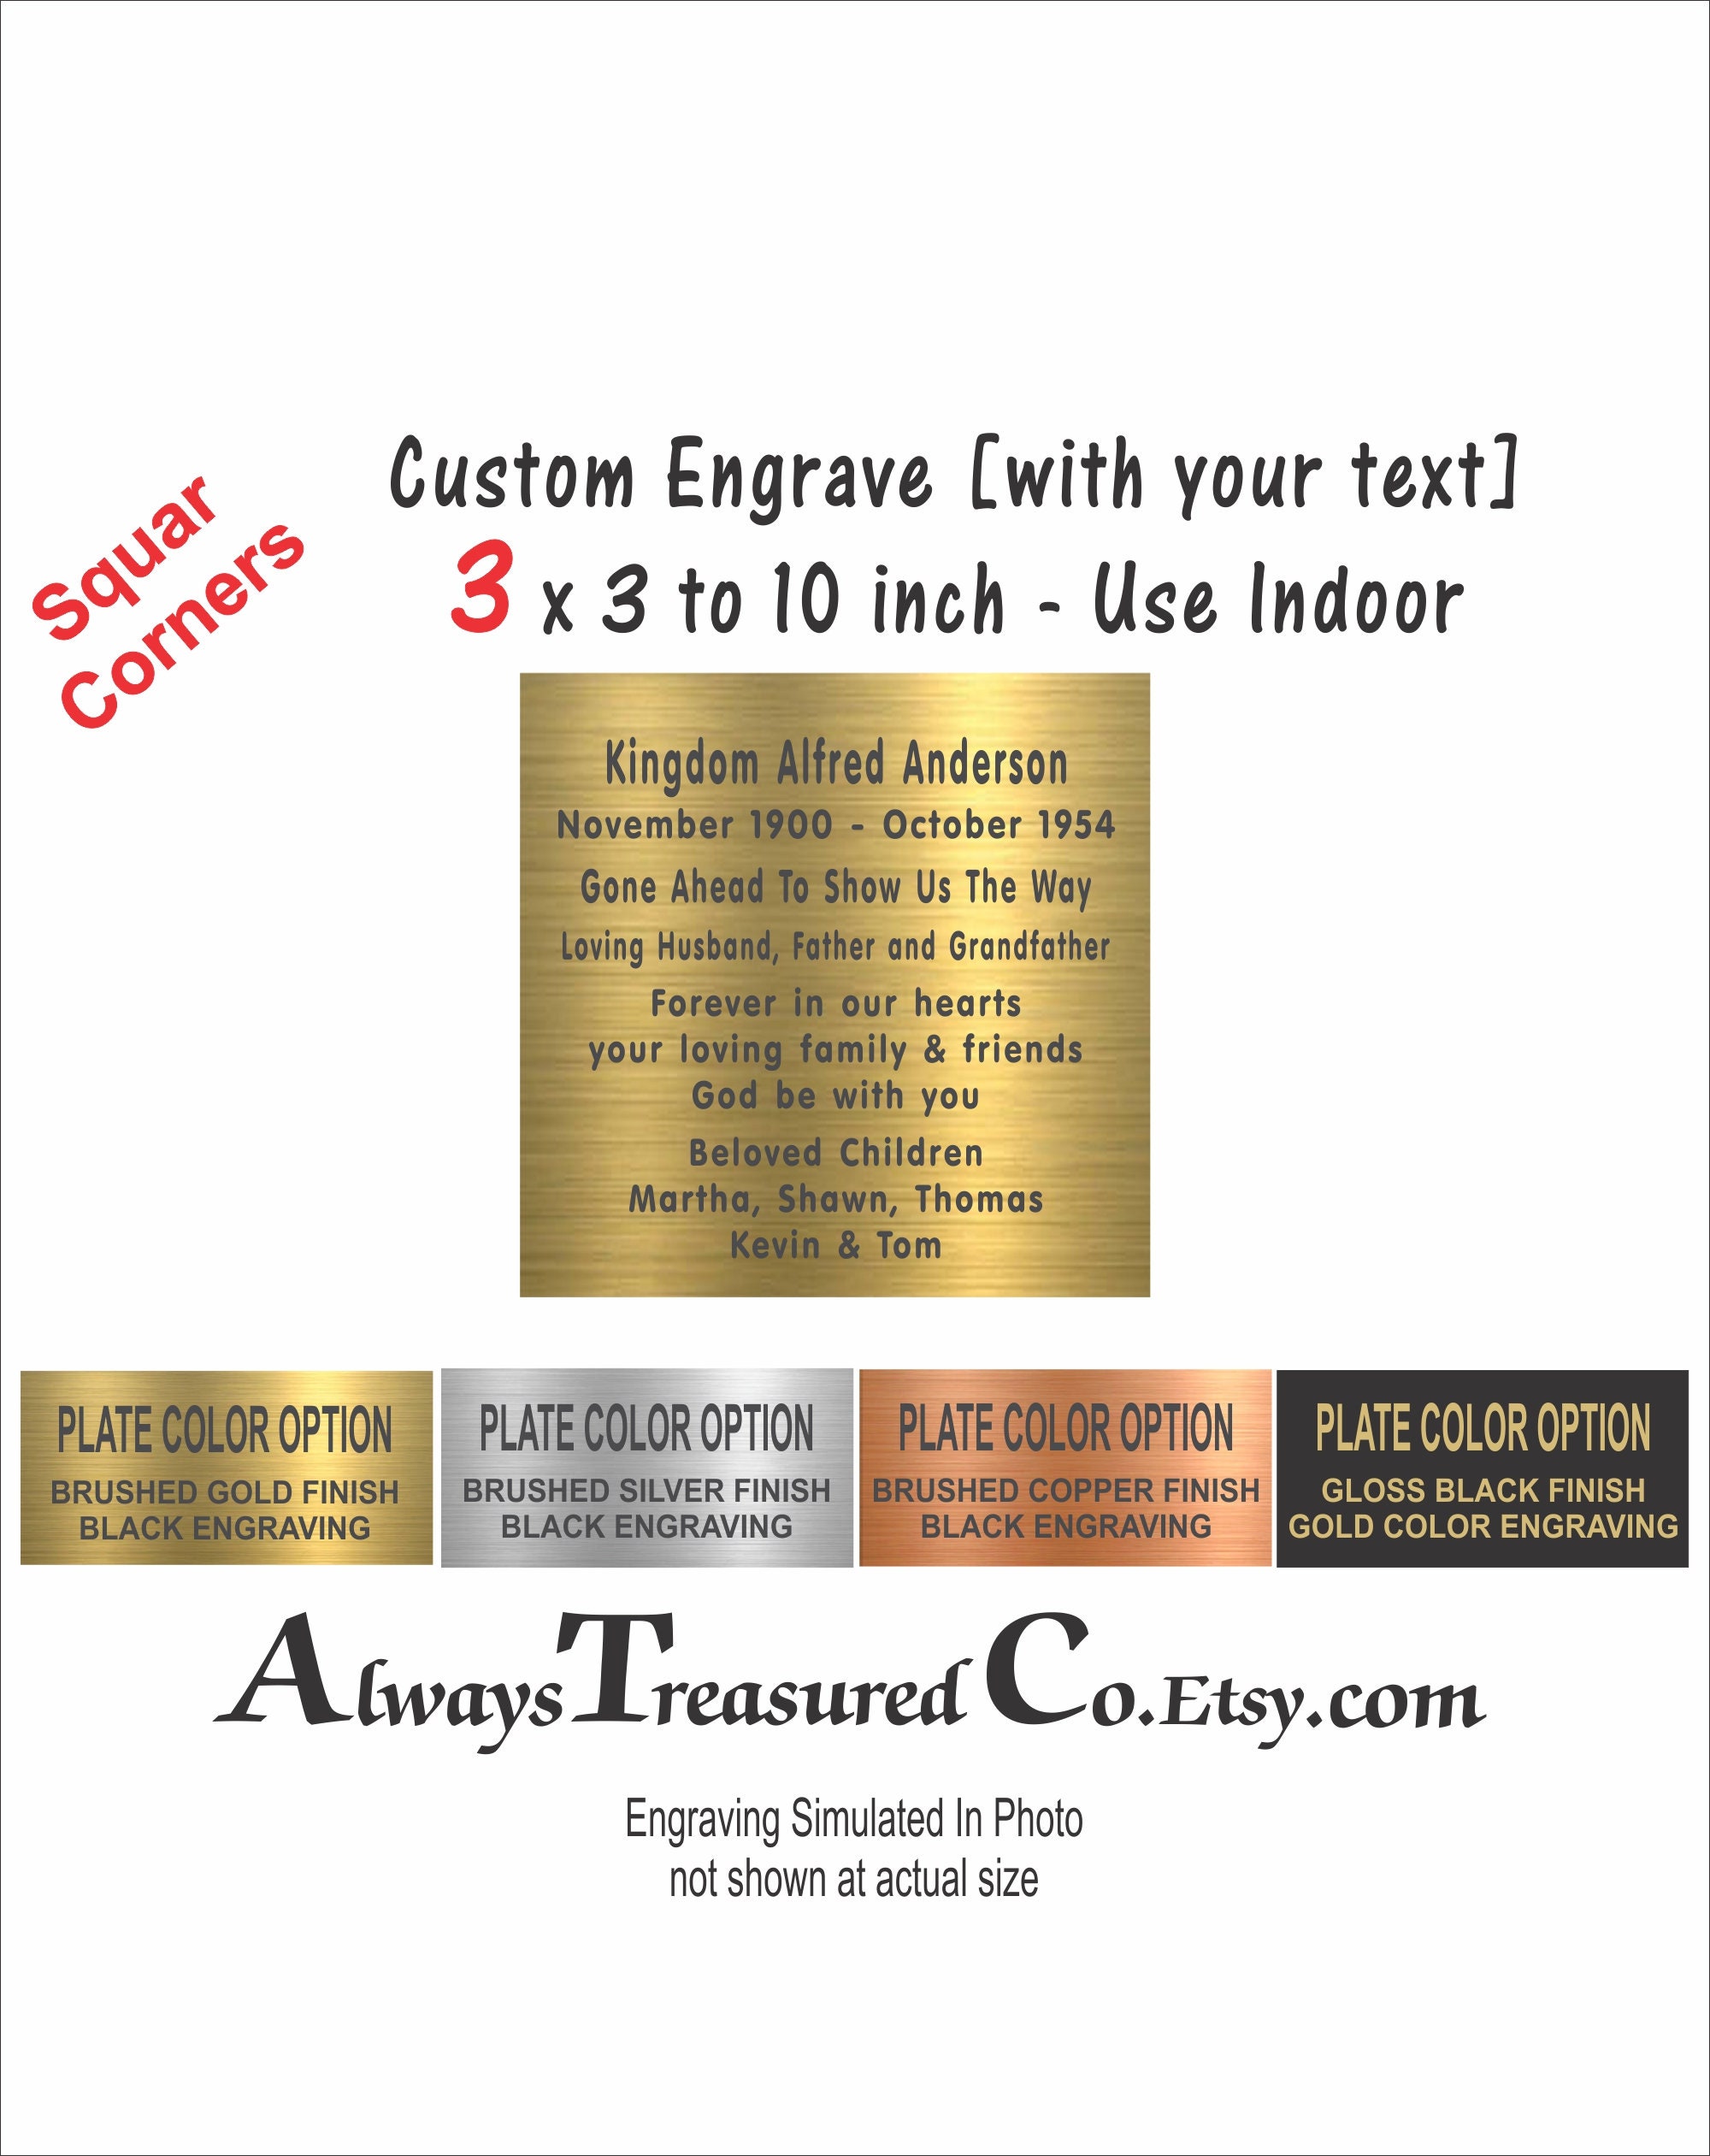 1x3 Custom Engraved Sublimation Gold Color Plate Plaque Name Tag Trophy Flag